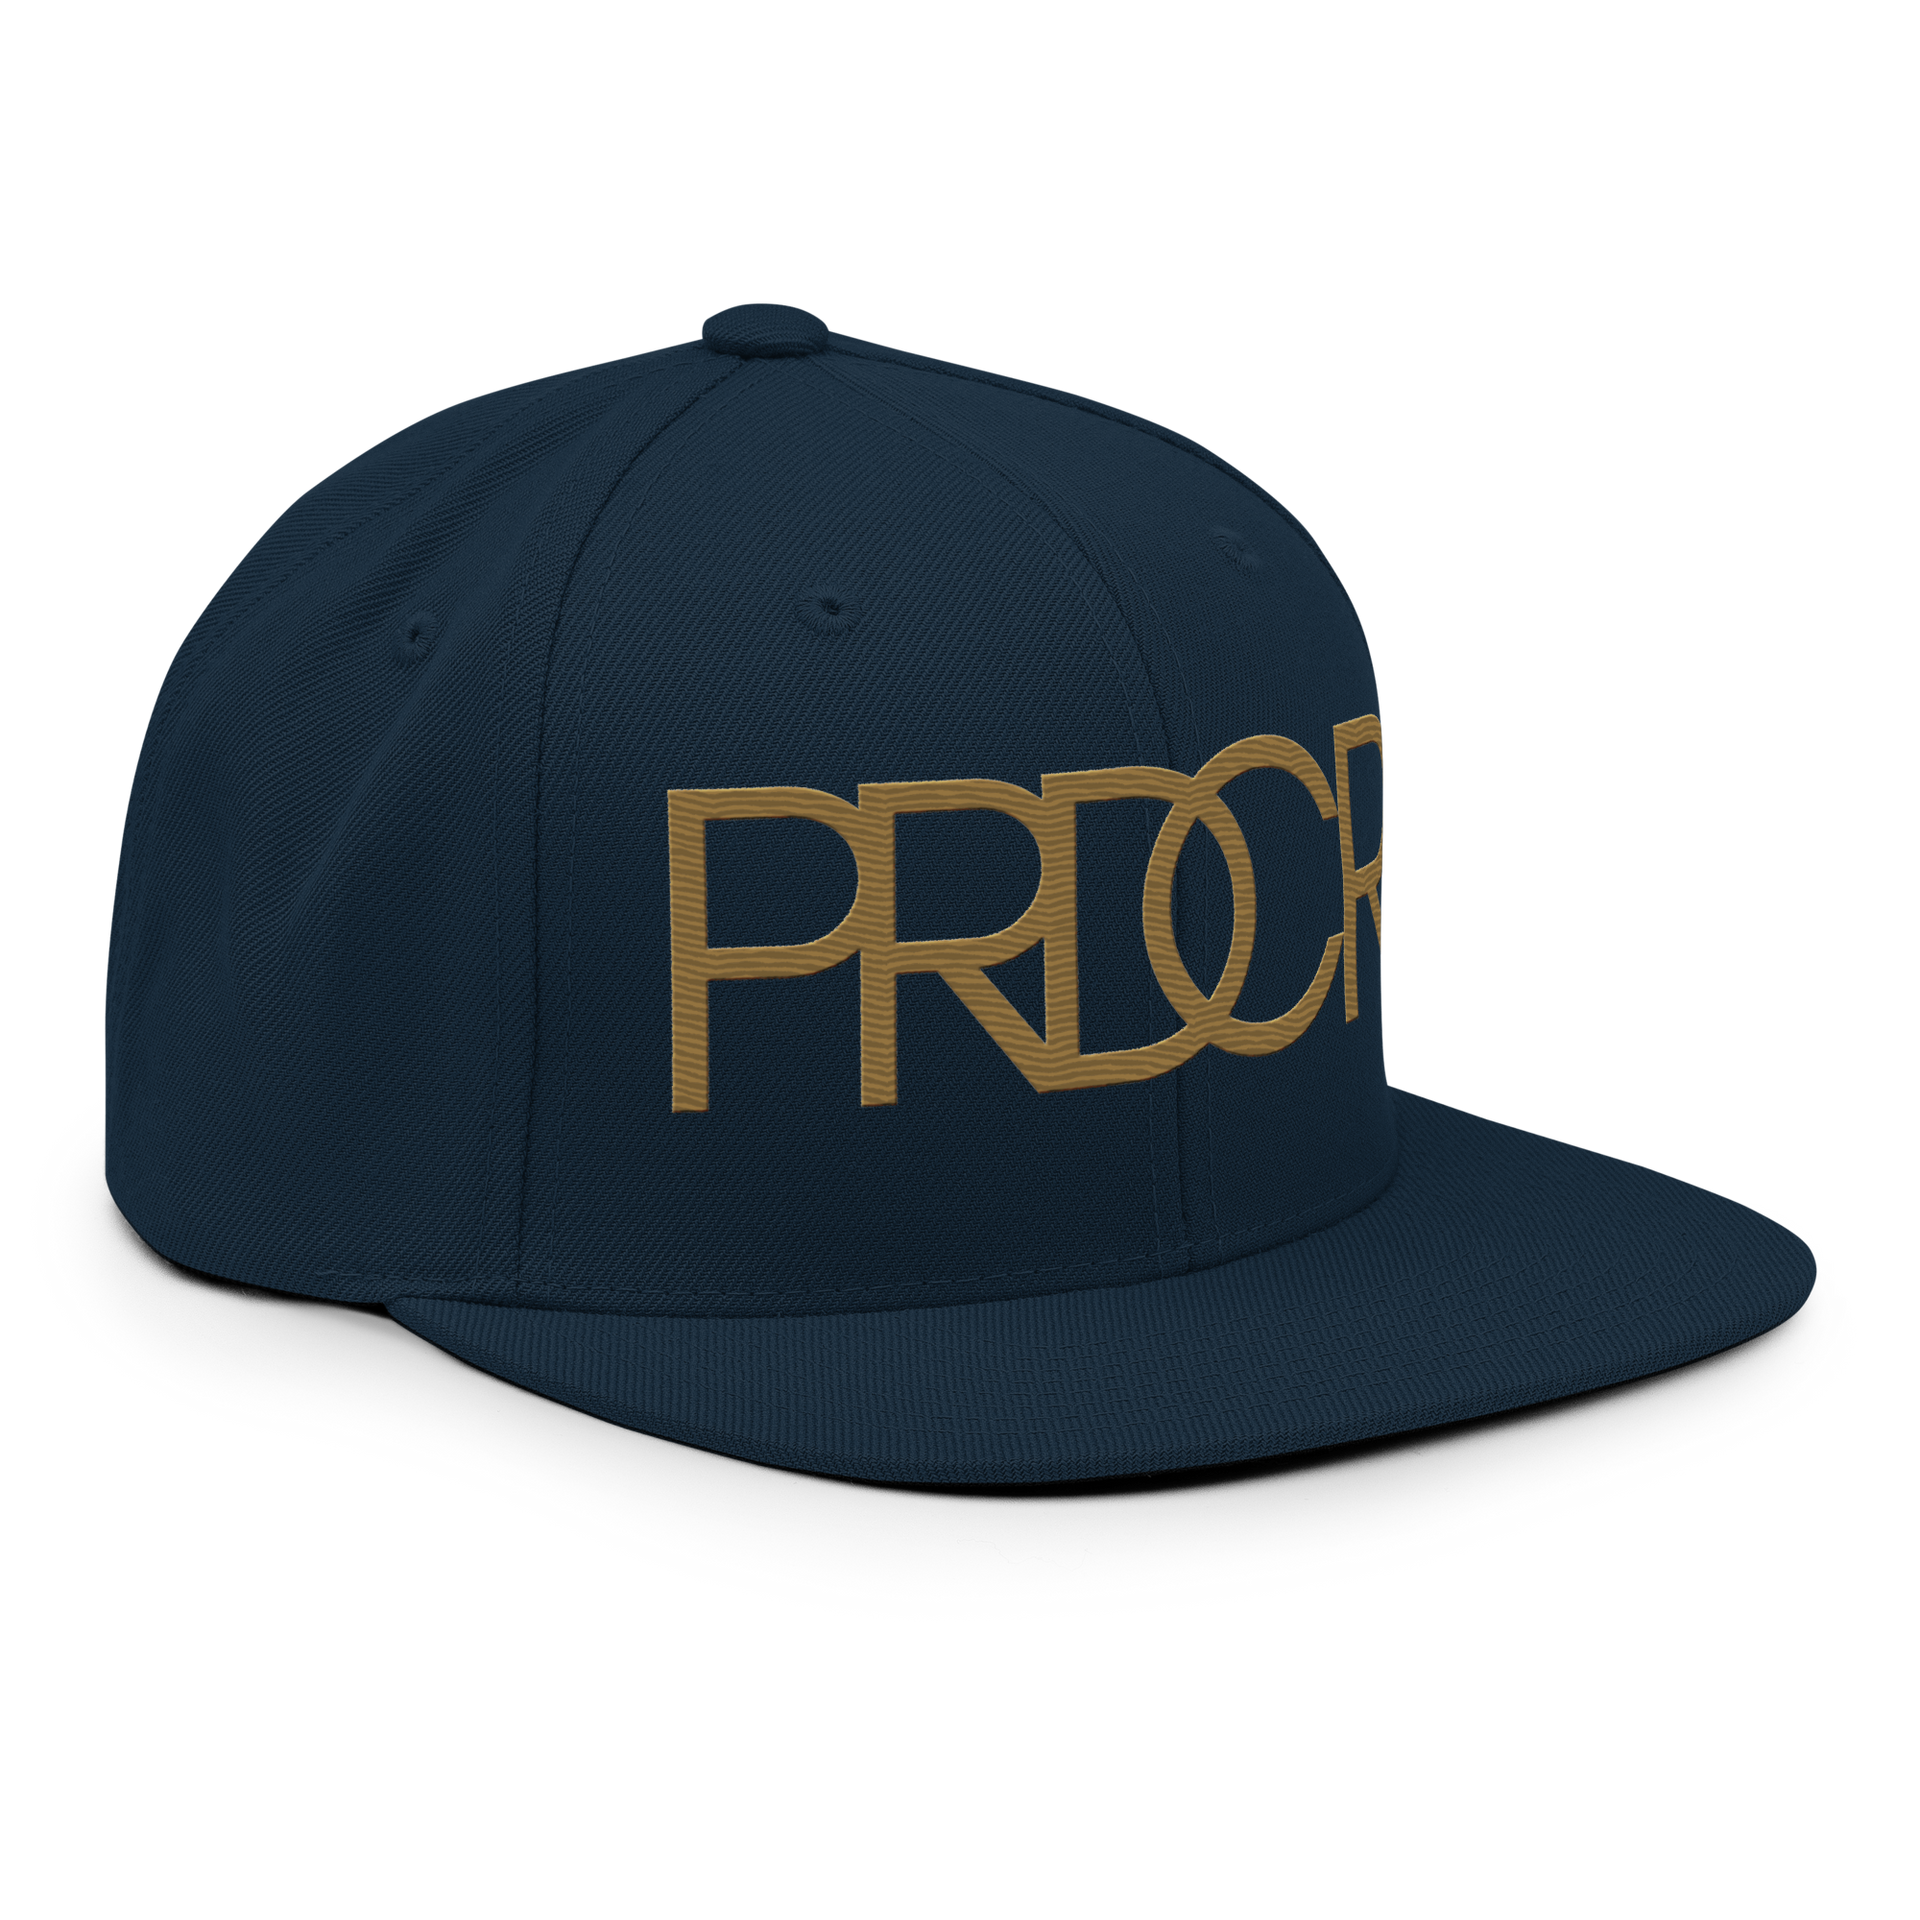 Blackstock | PRDCR Gold Snapback Hat